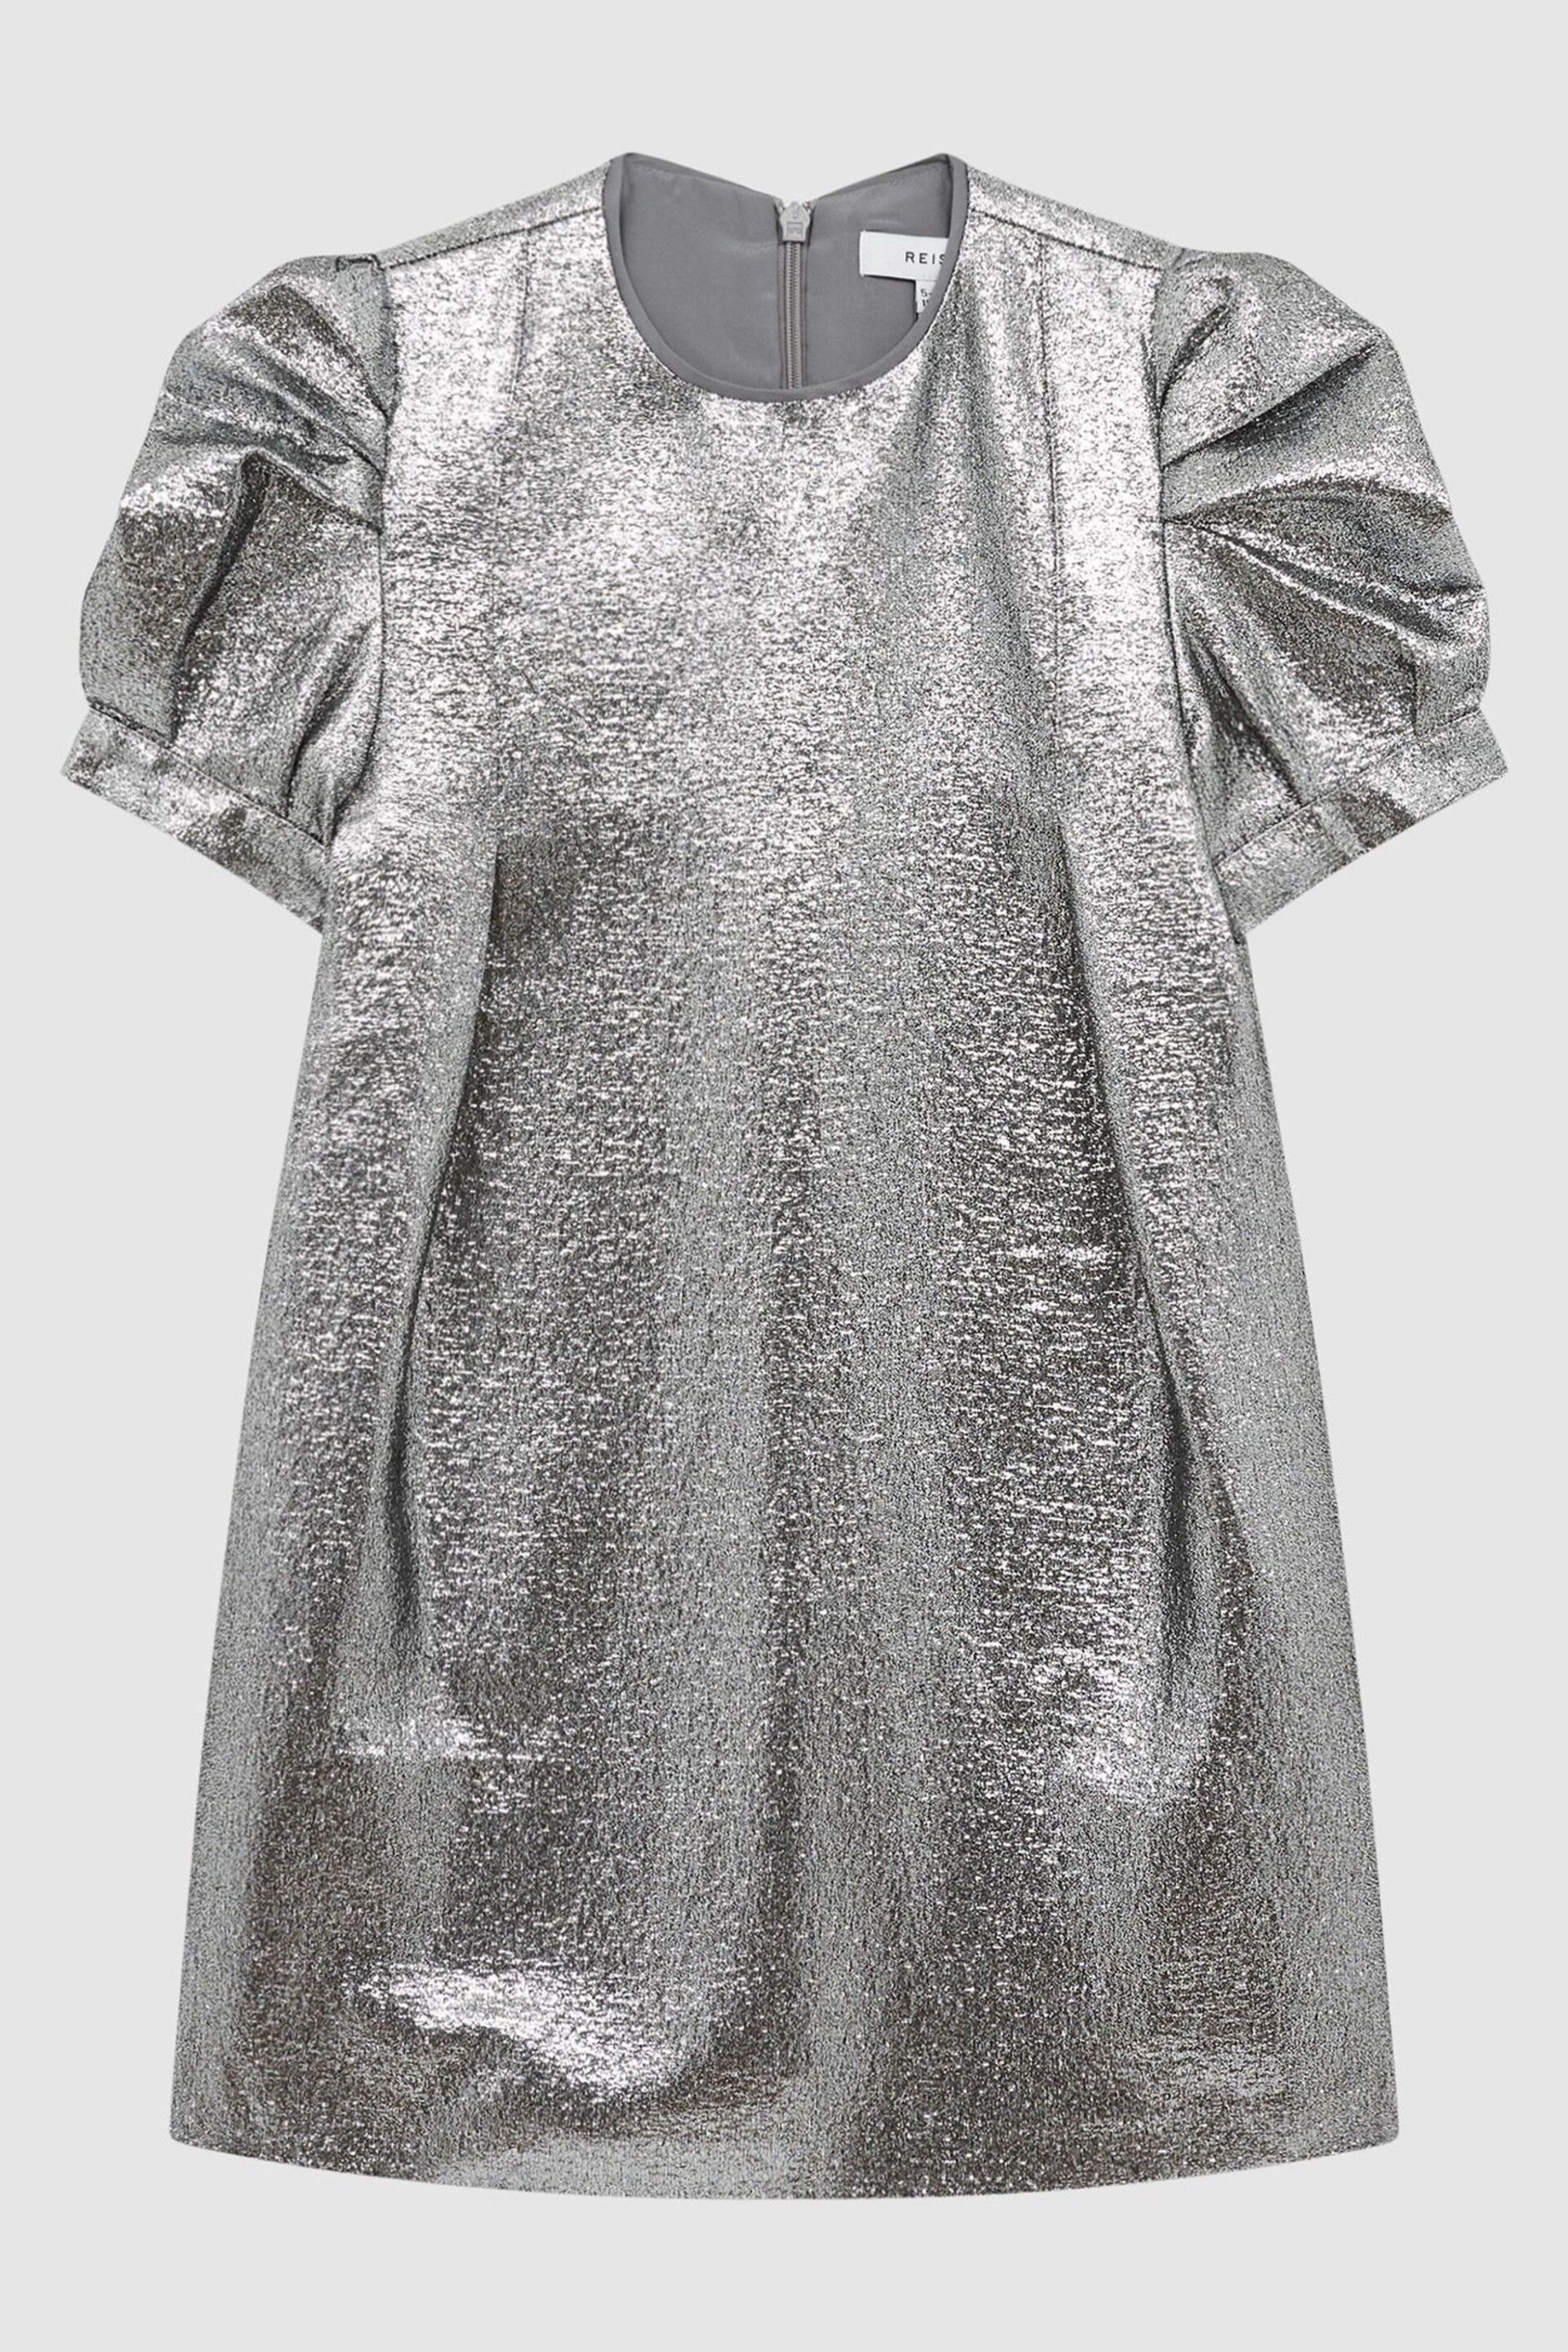 Reiss Silver Ellie Senior Metallic Shoulder Detail Dress - Image 2 of 6